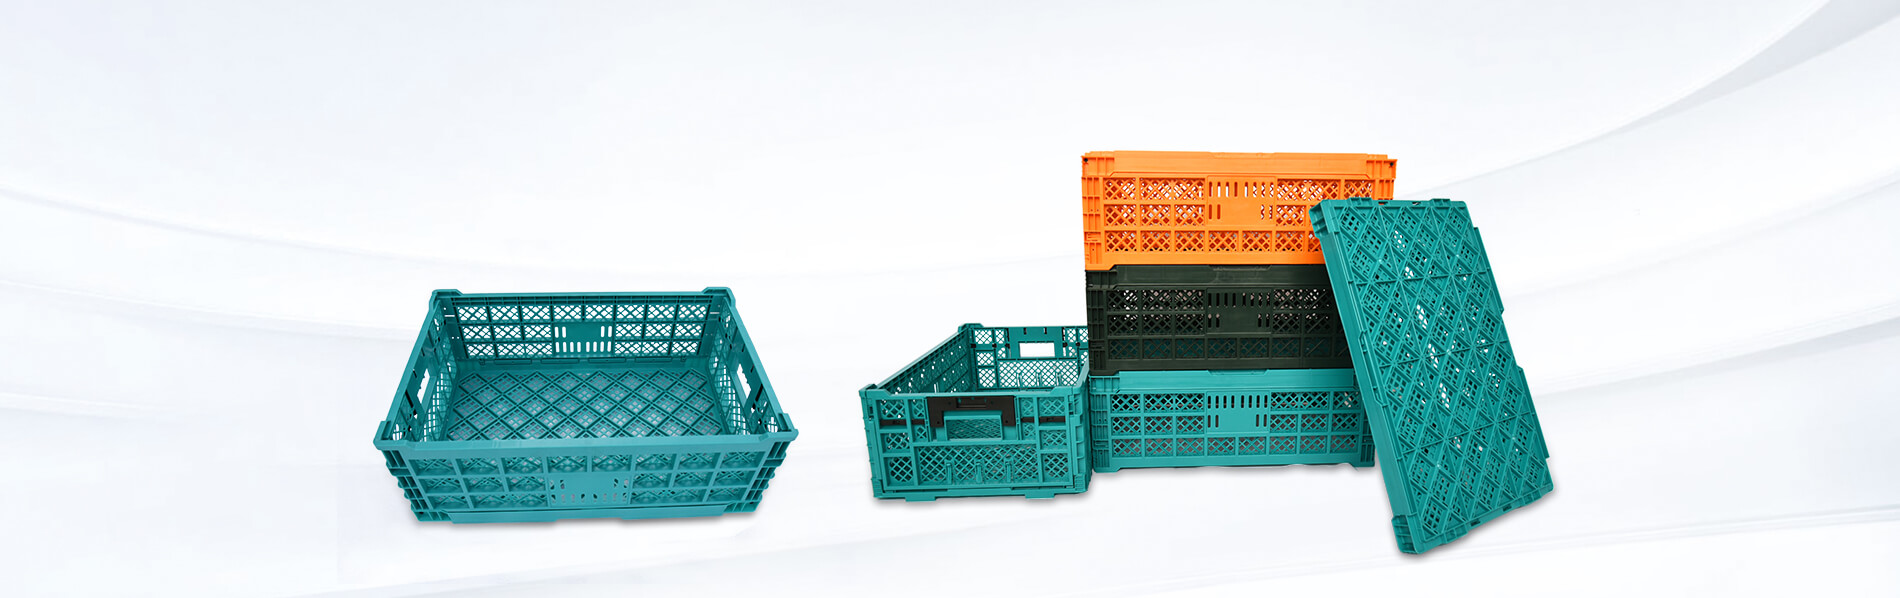 Foldable Crate F Series - SHG